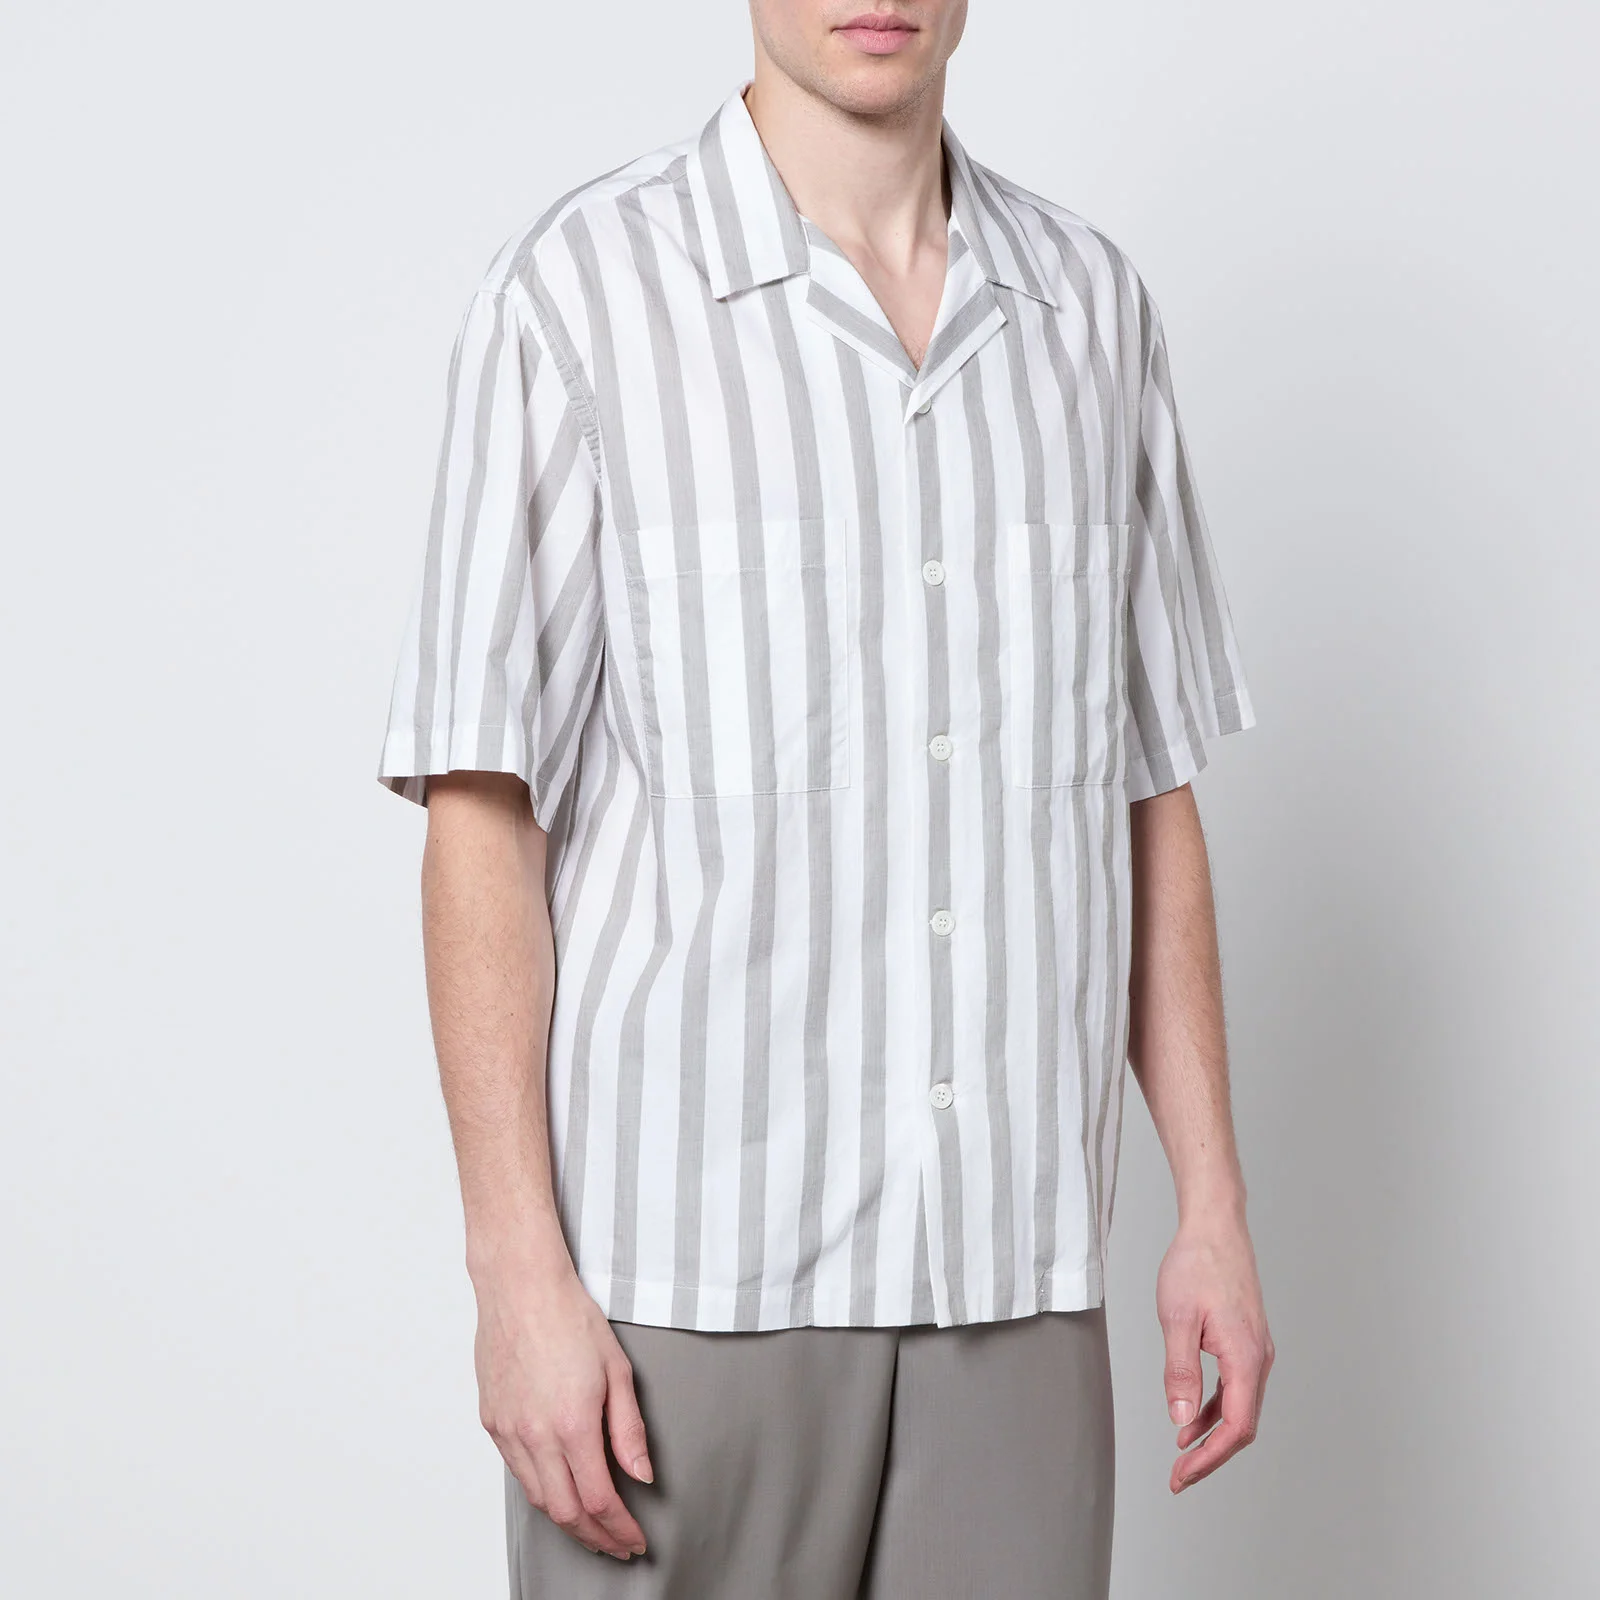 Barena Venezia Solana Striped Cotton Shirt - IT 54/XXL Image 1